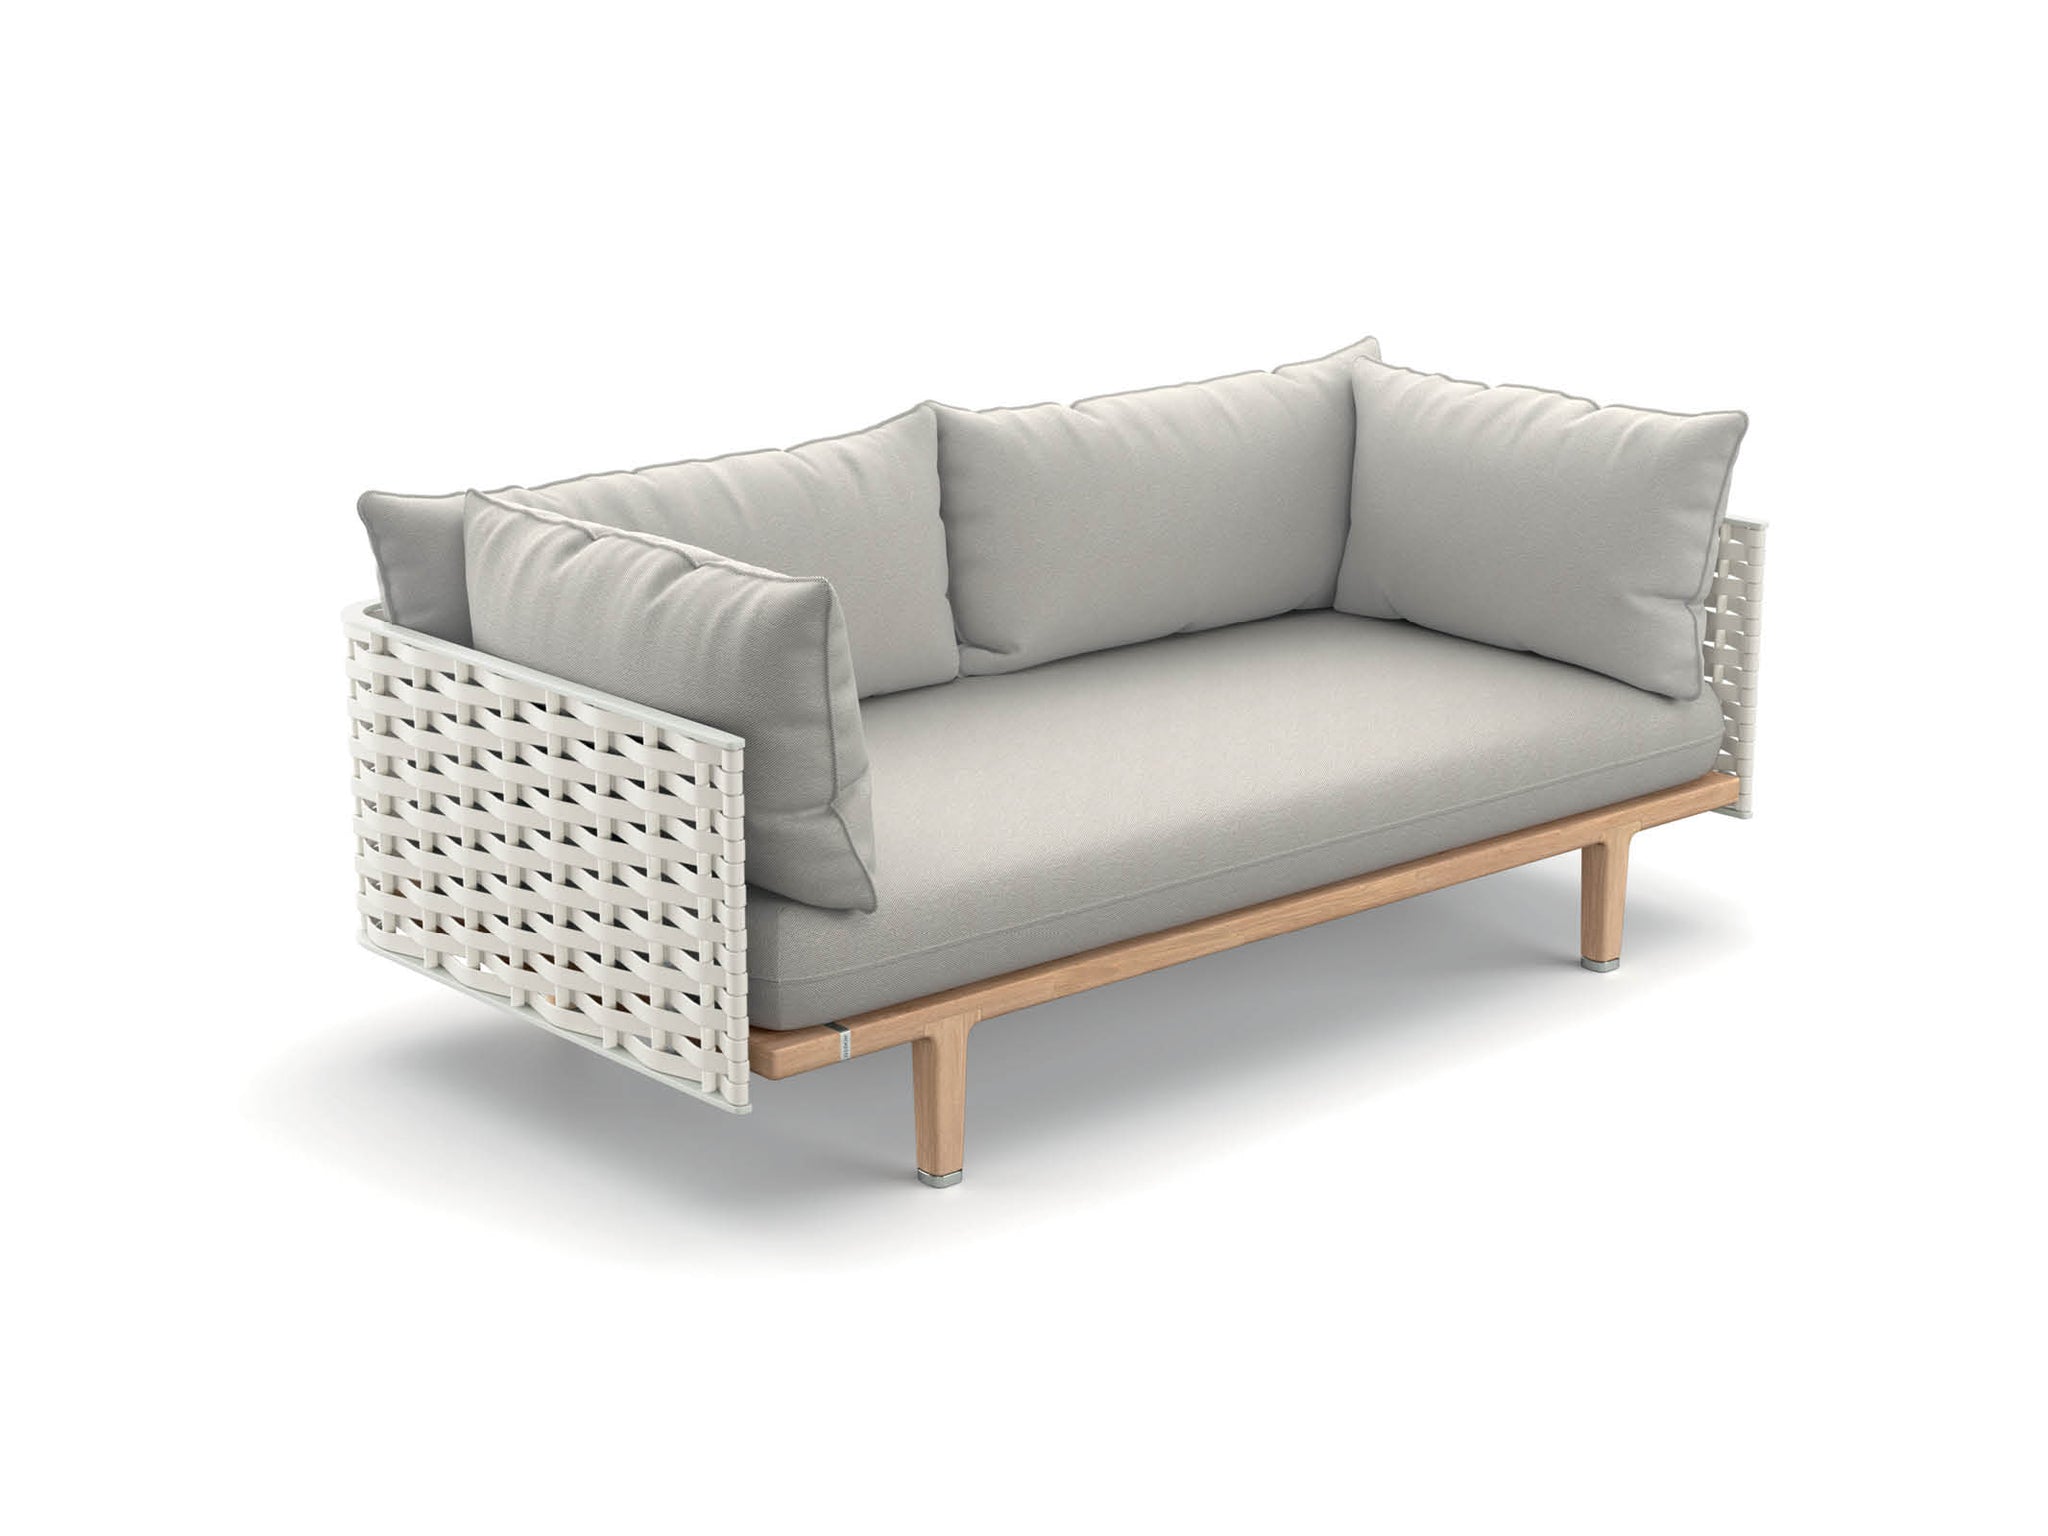 Sealine sofa